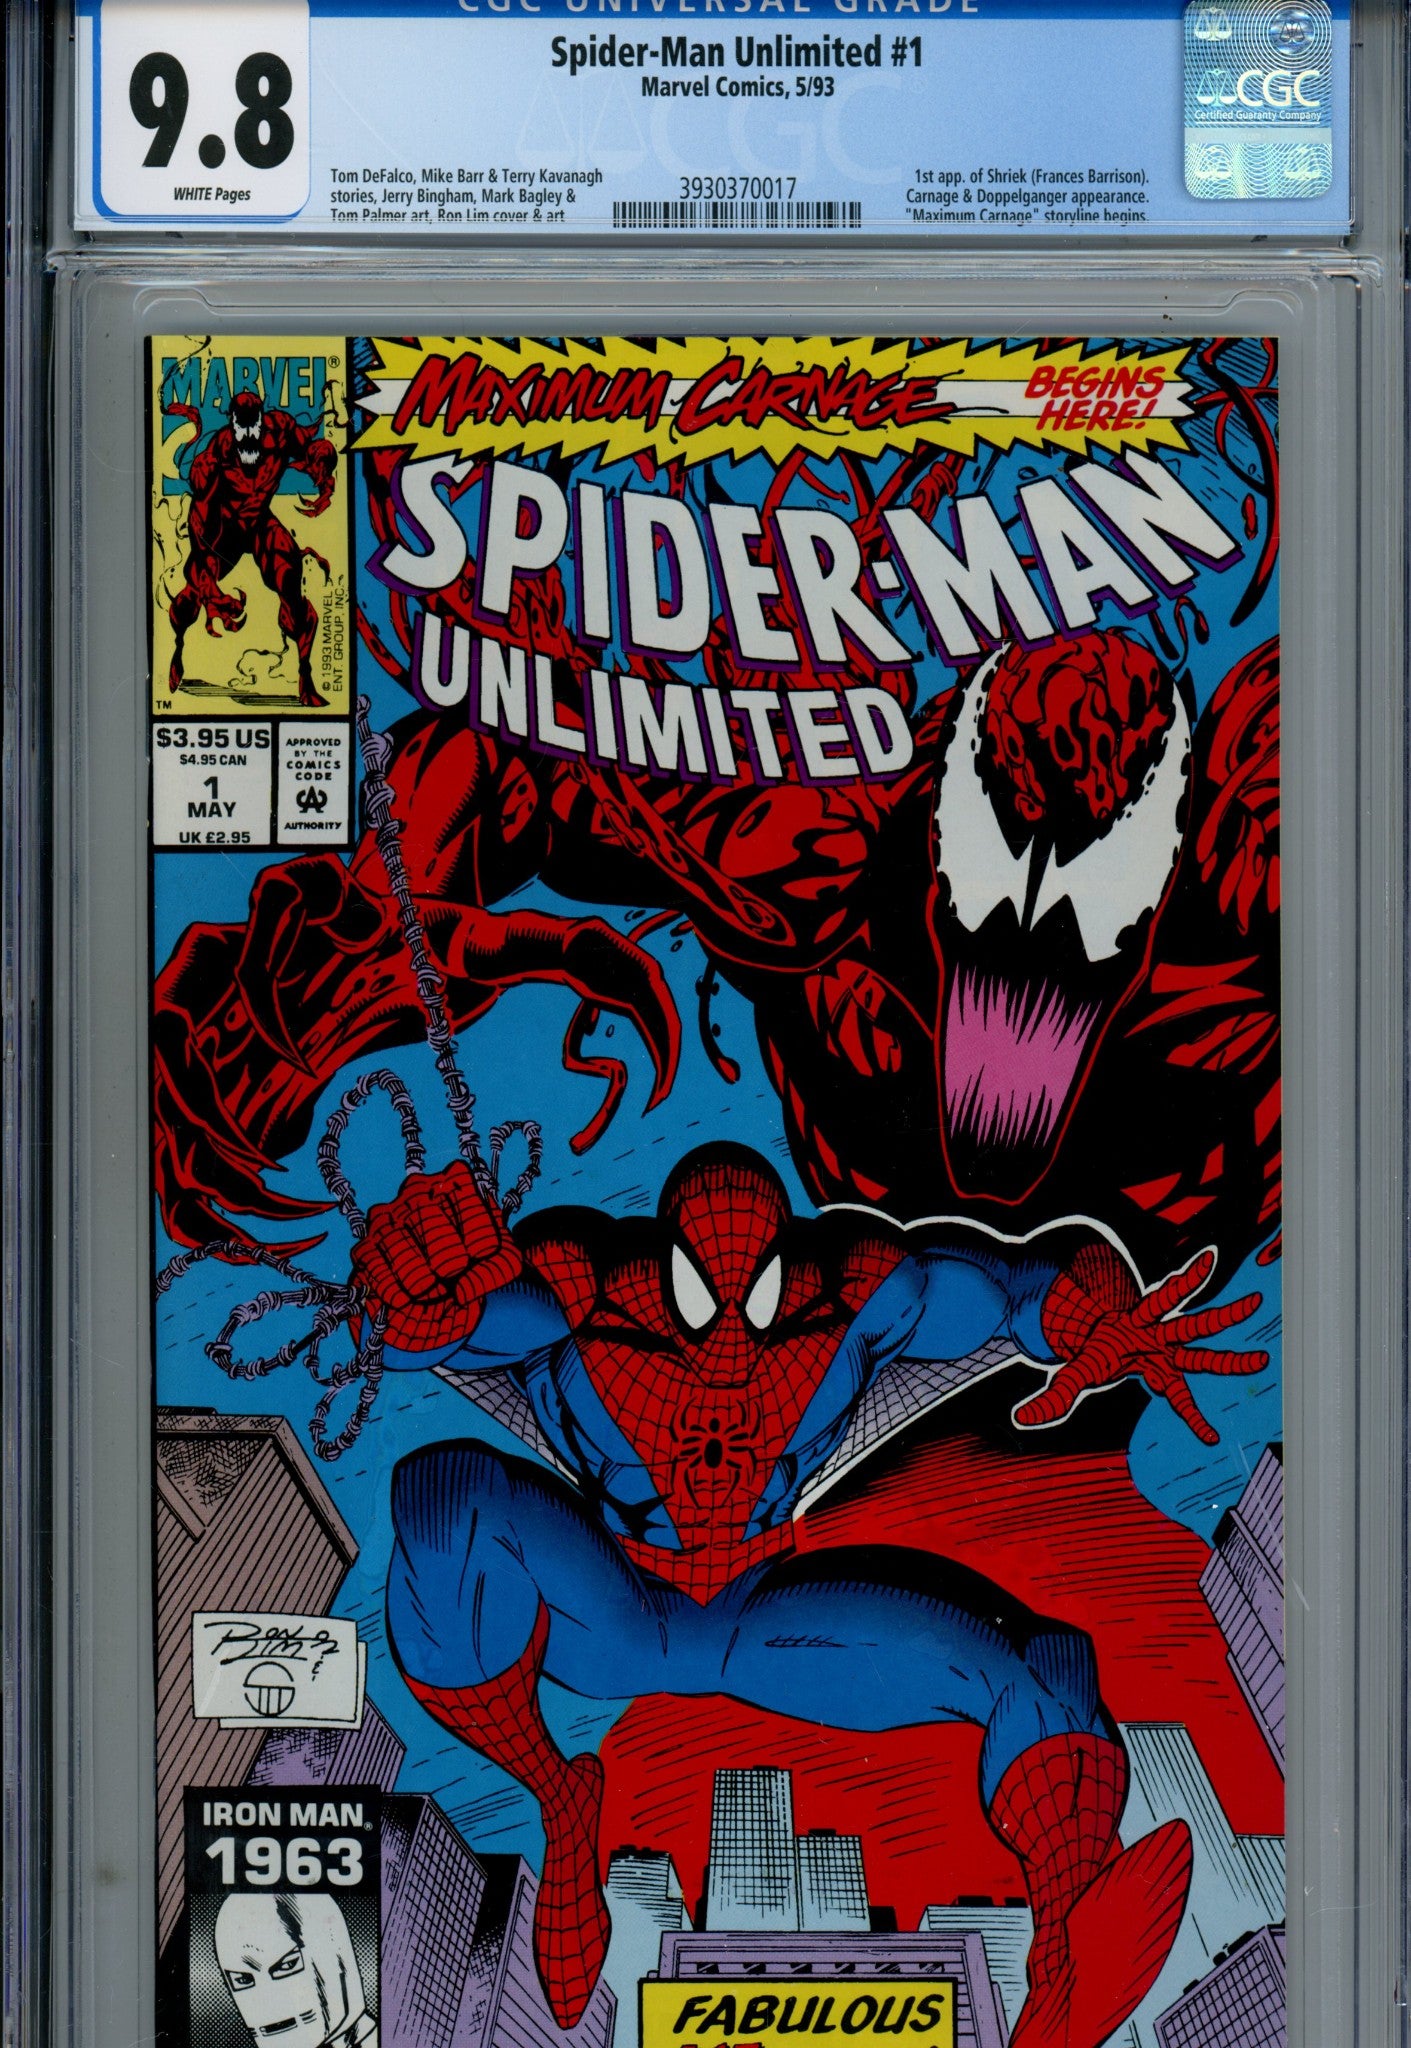 Spider-Man Unlimited Vol 1 1 CGC 9.8 (NM/M) (1993) 